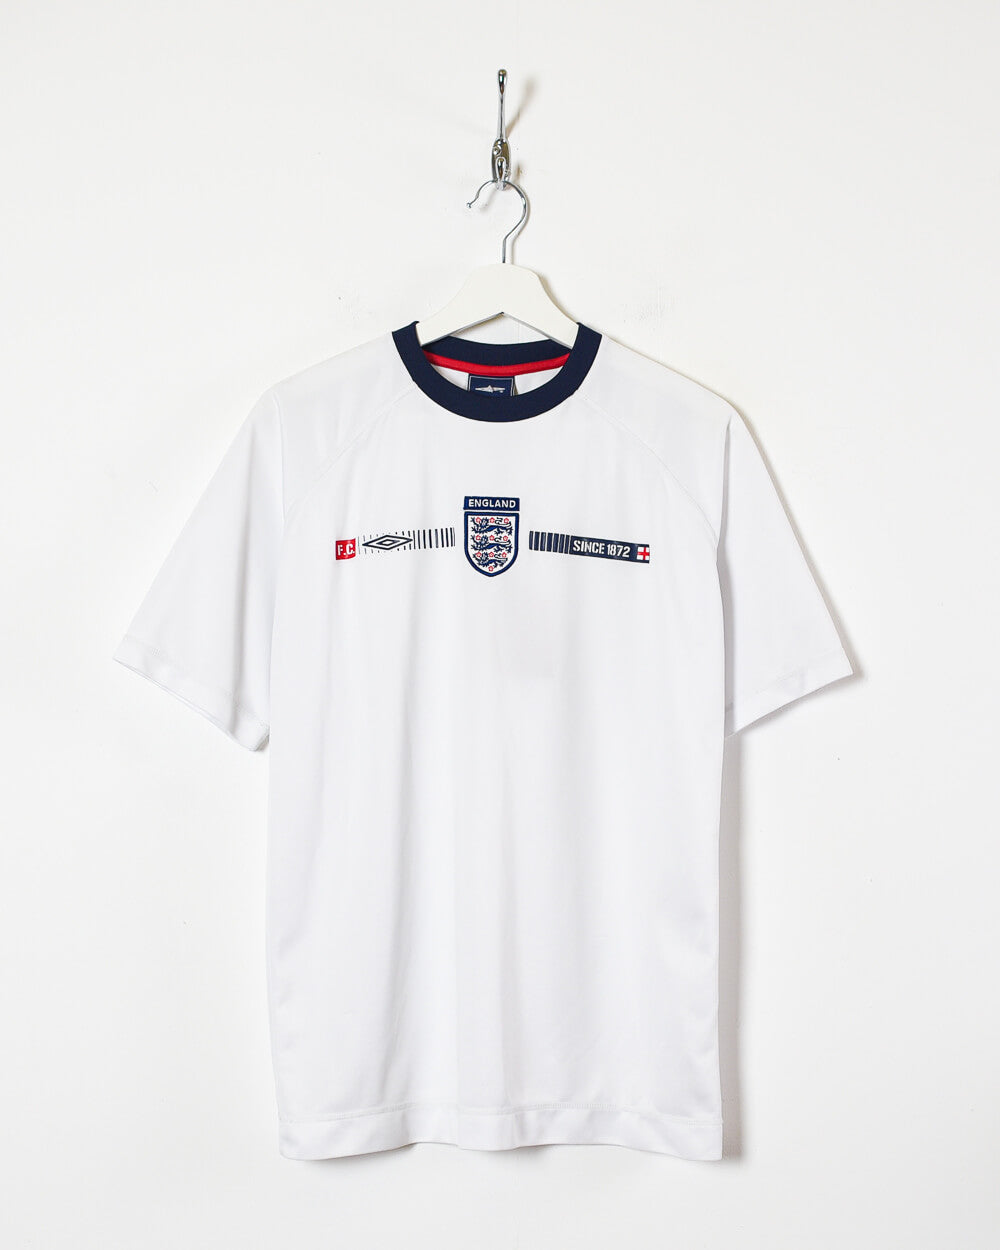 White Umbro 00s England Training T-Shirt - Medium